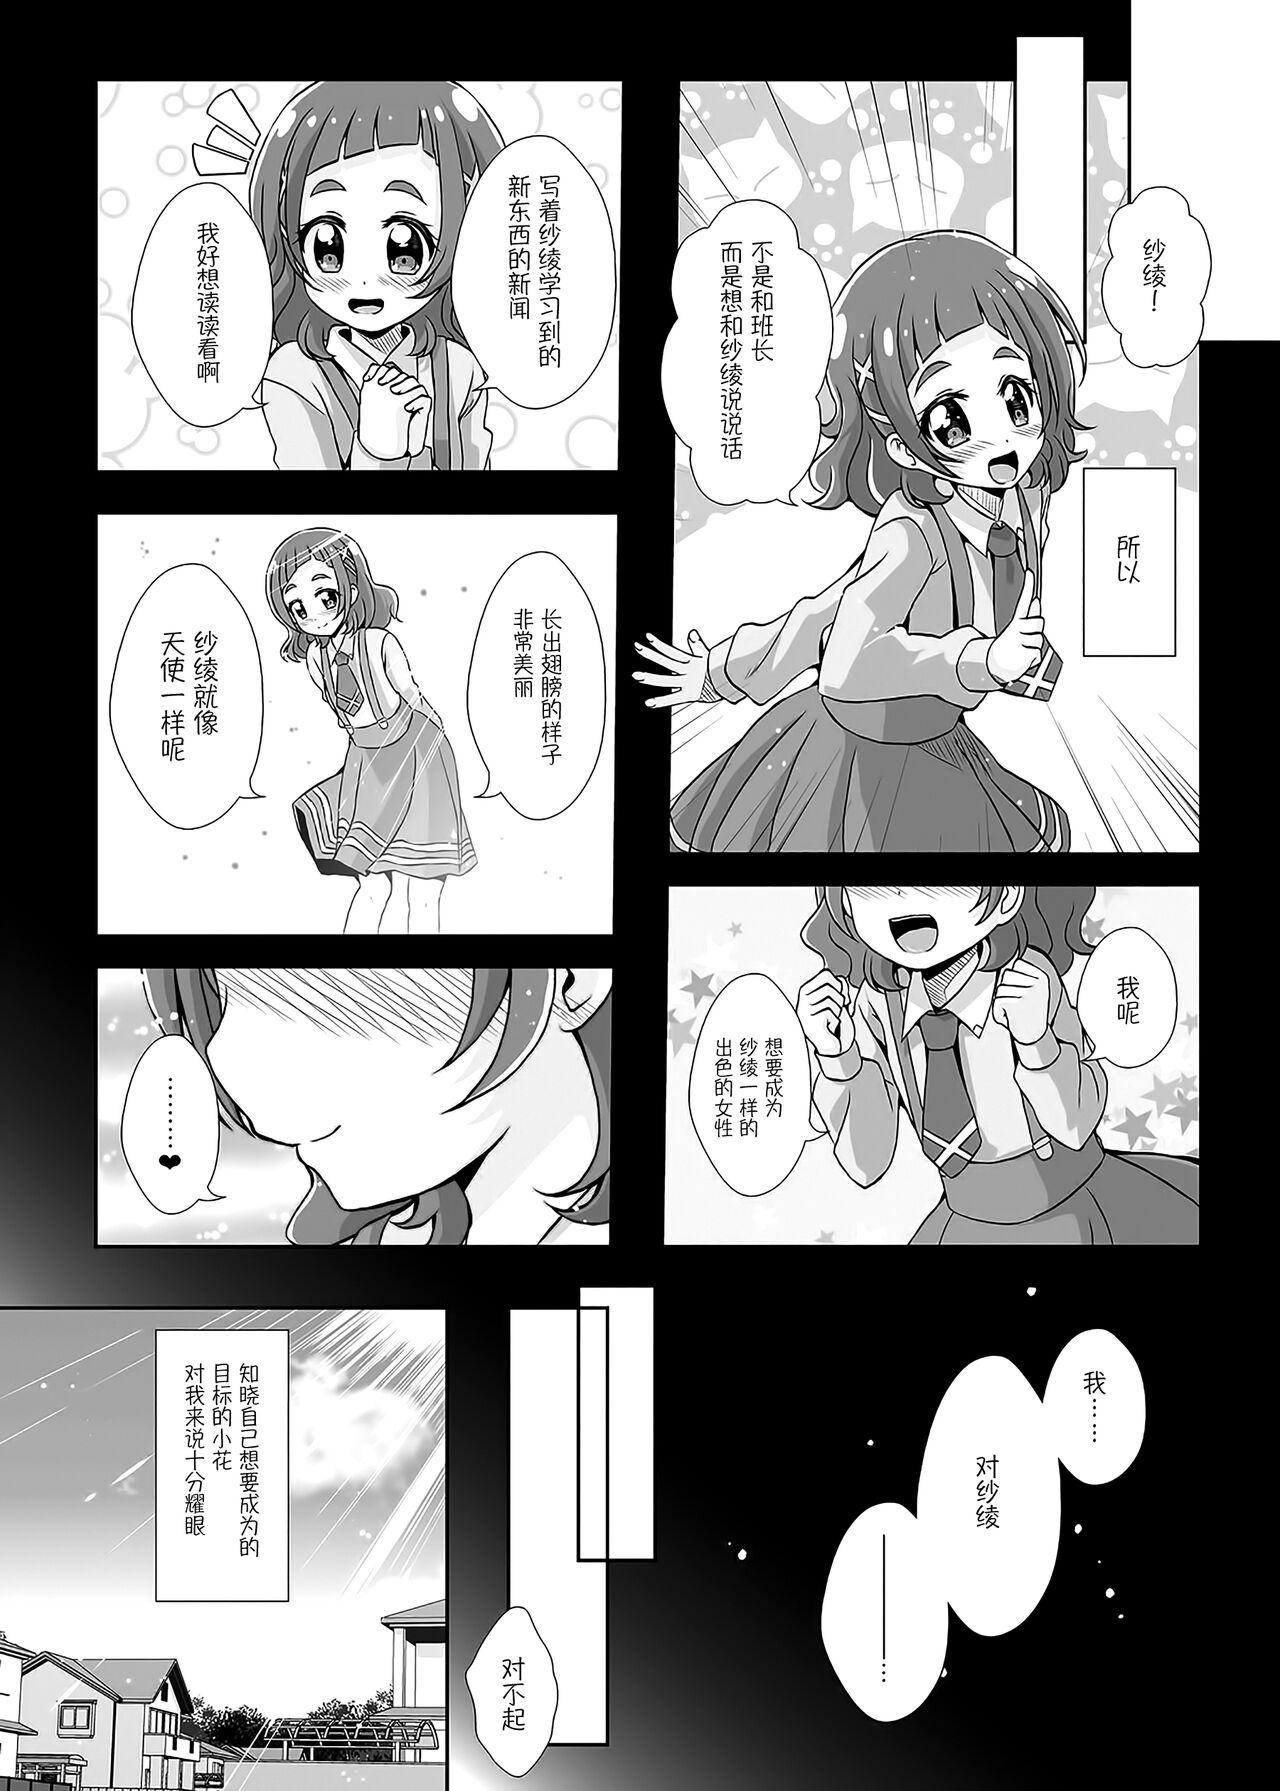 Camshow Watashi no Kokoro no Naka no Hana - Hana in my heart - Hugtto precure Gayclips - Page 4